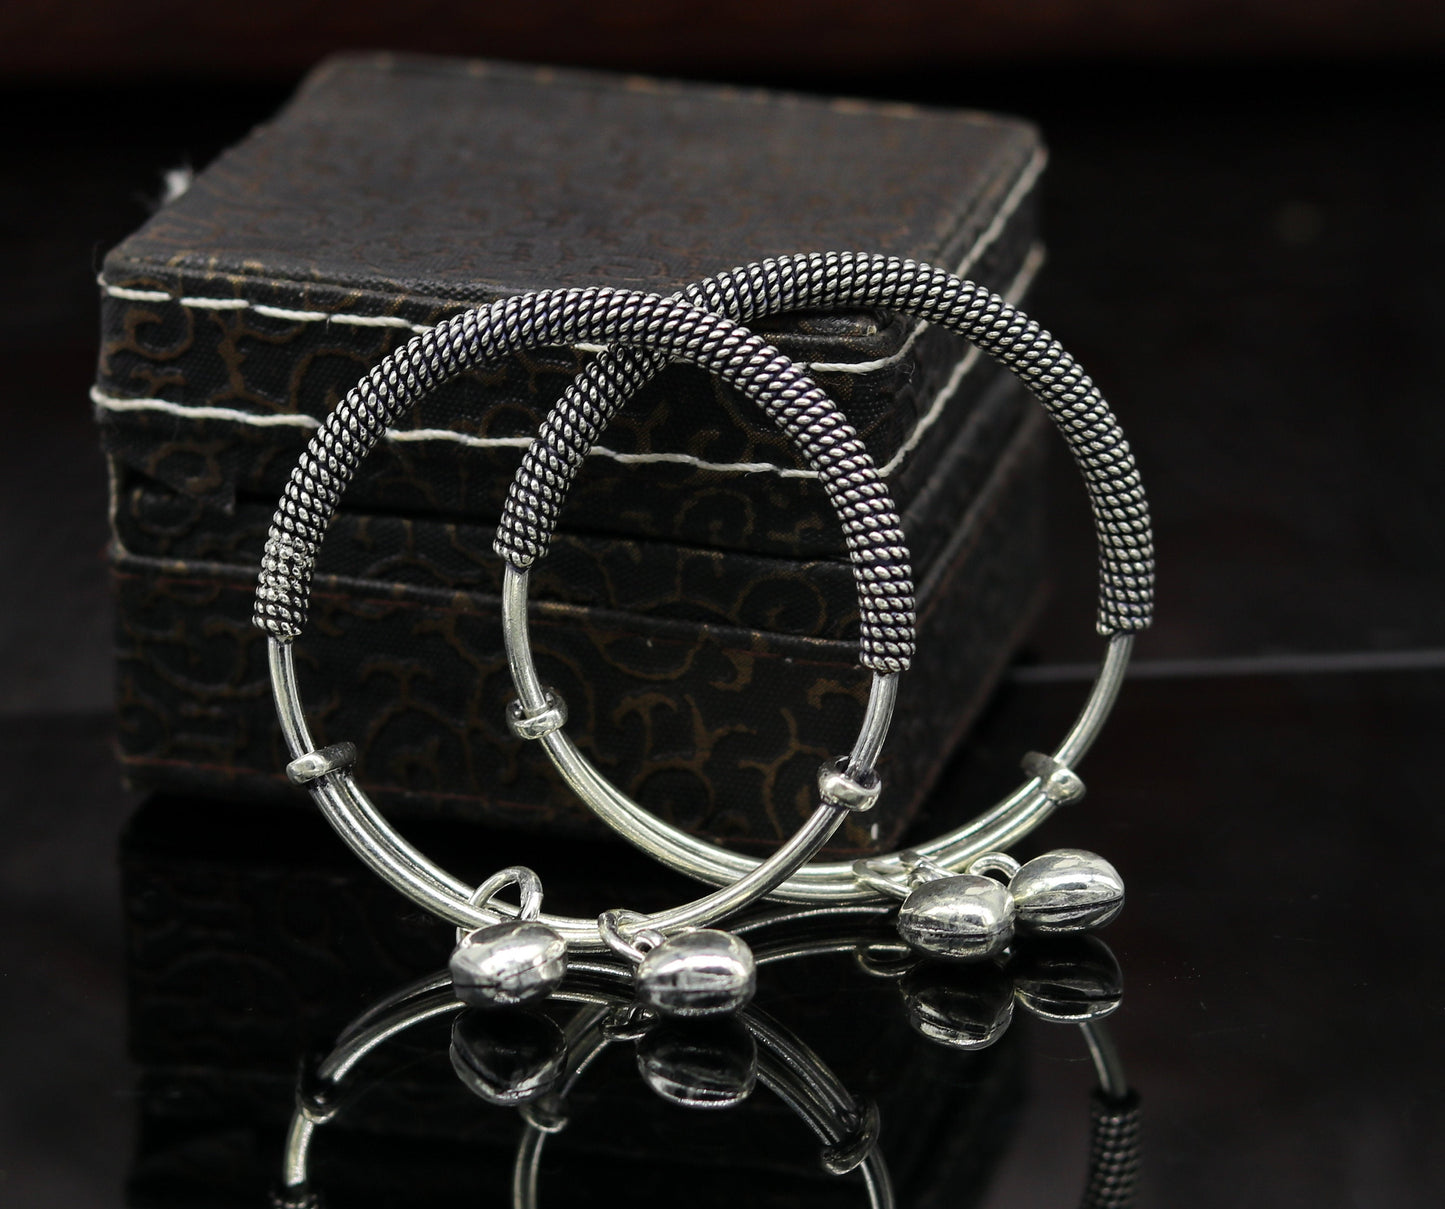 925 sterling silver handmade fancy adjustable baby bangle kada bracelet, fabulous heart shape hangings charm bangles unisex kids bbk70 - TRIBAL ORNAMENTS